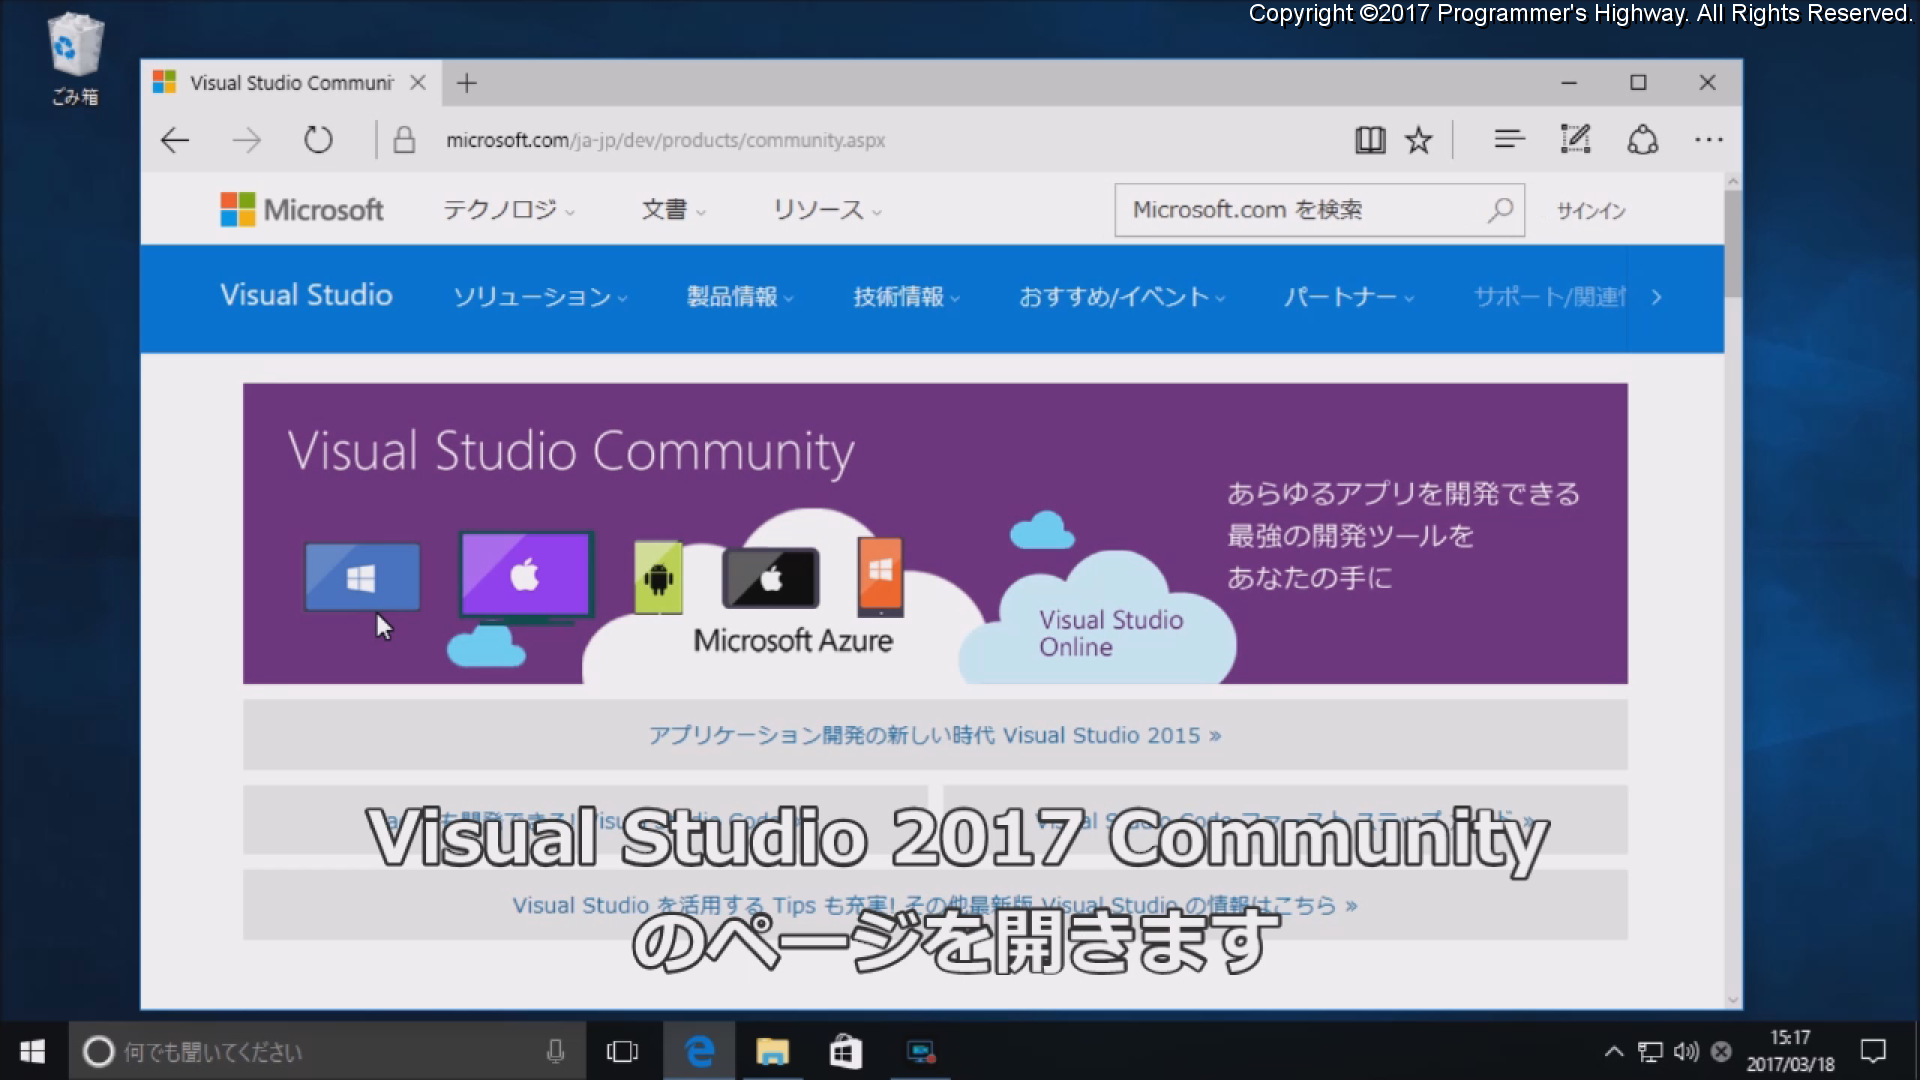 Visual Studio 2017 Community のページを開きます